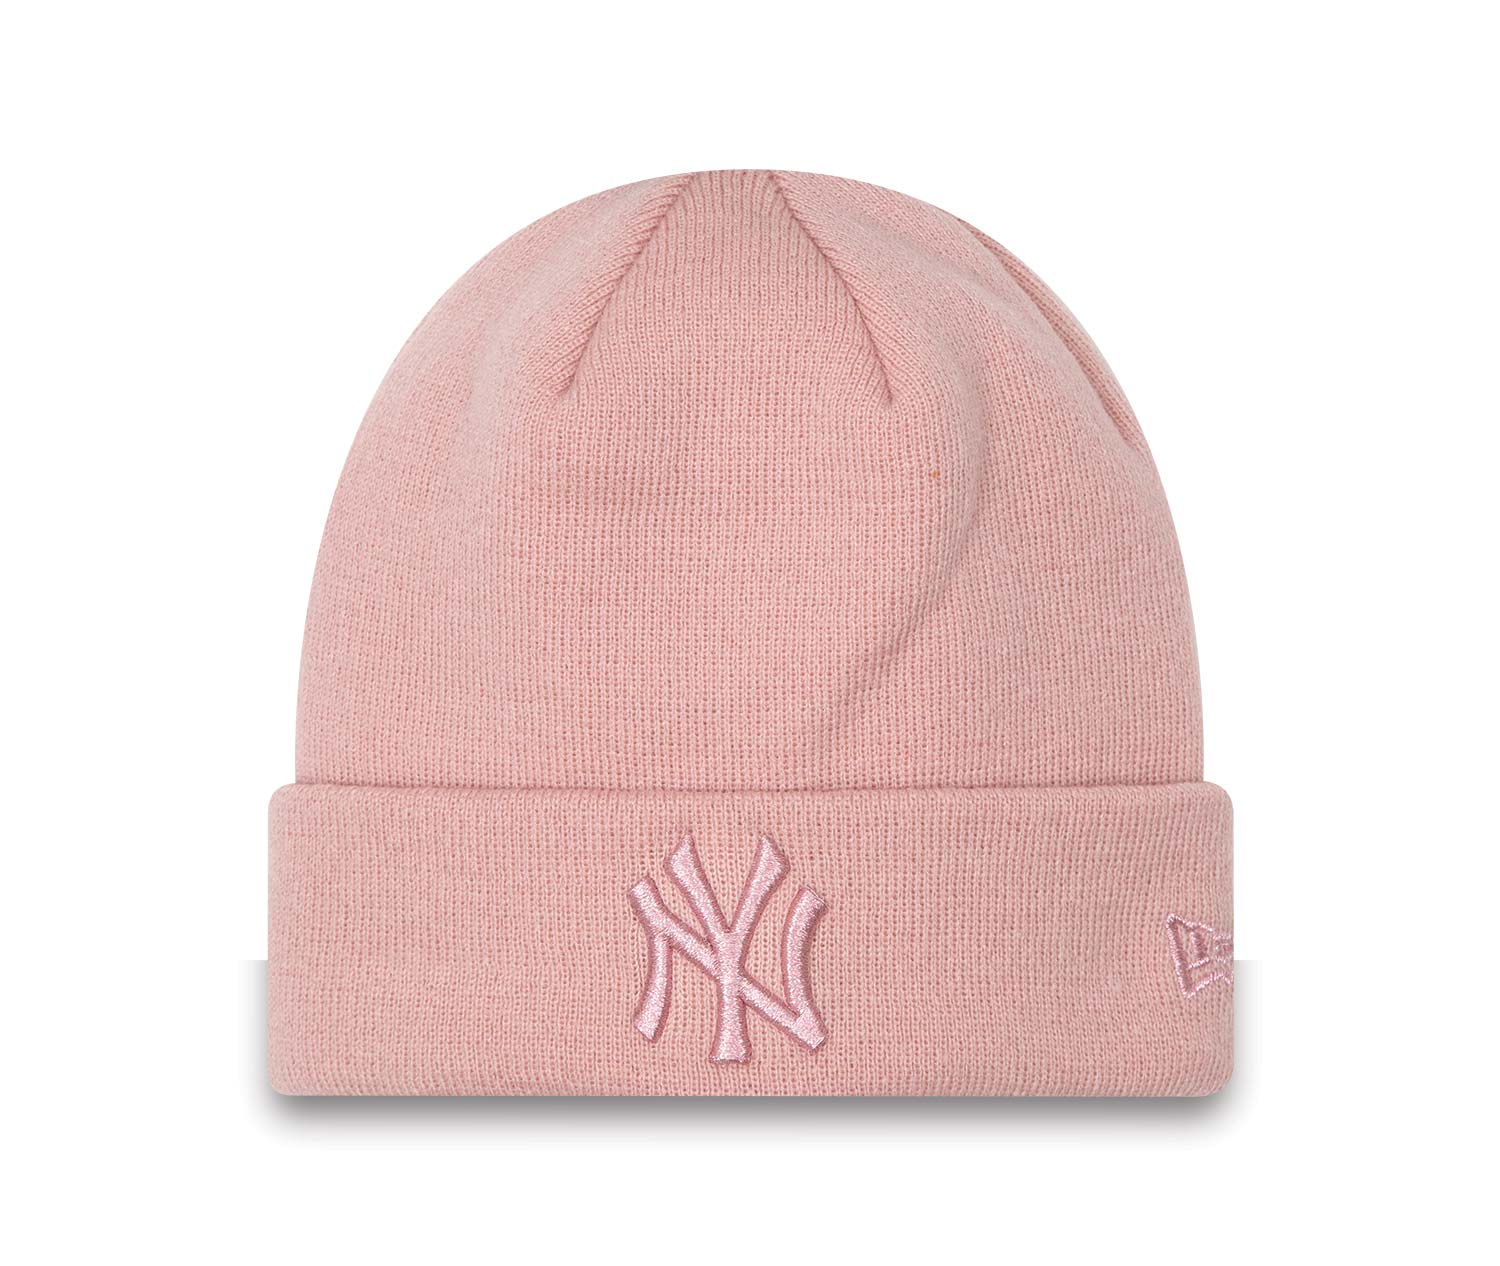 Official New Era Metallic Cuff New Yankees Pink Beanie Hat B8744_95 B8744_95 | New Era Cap Serbia